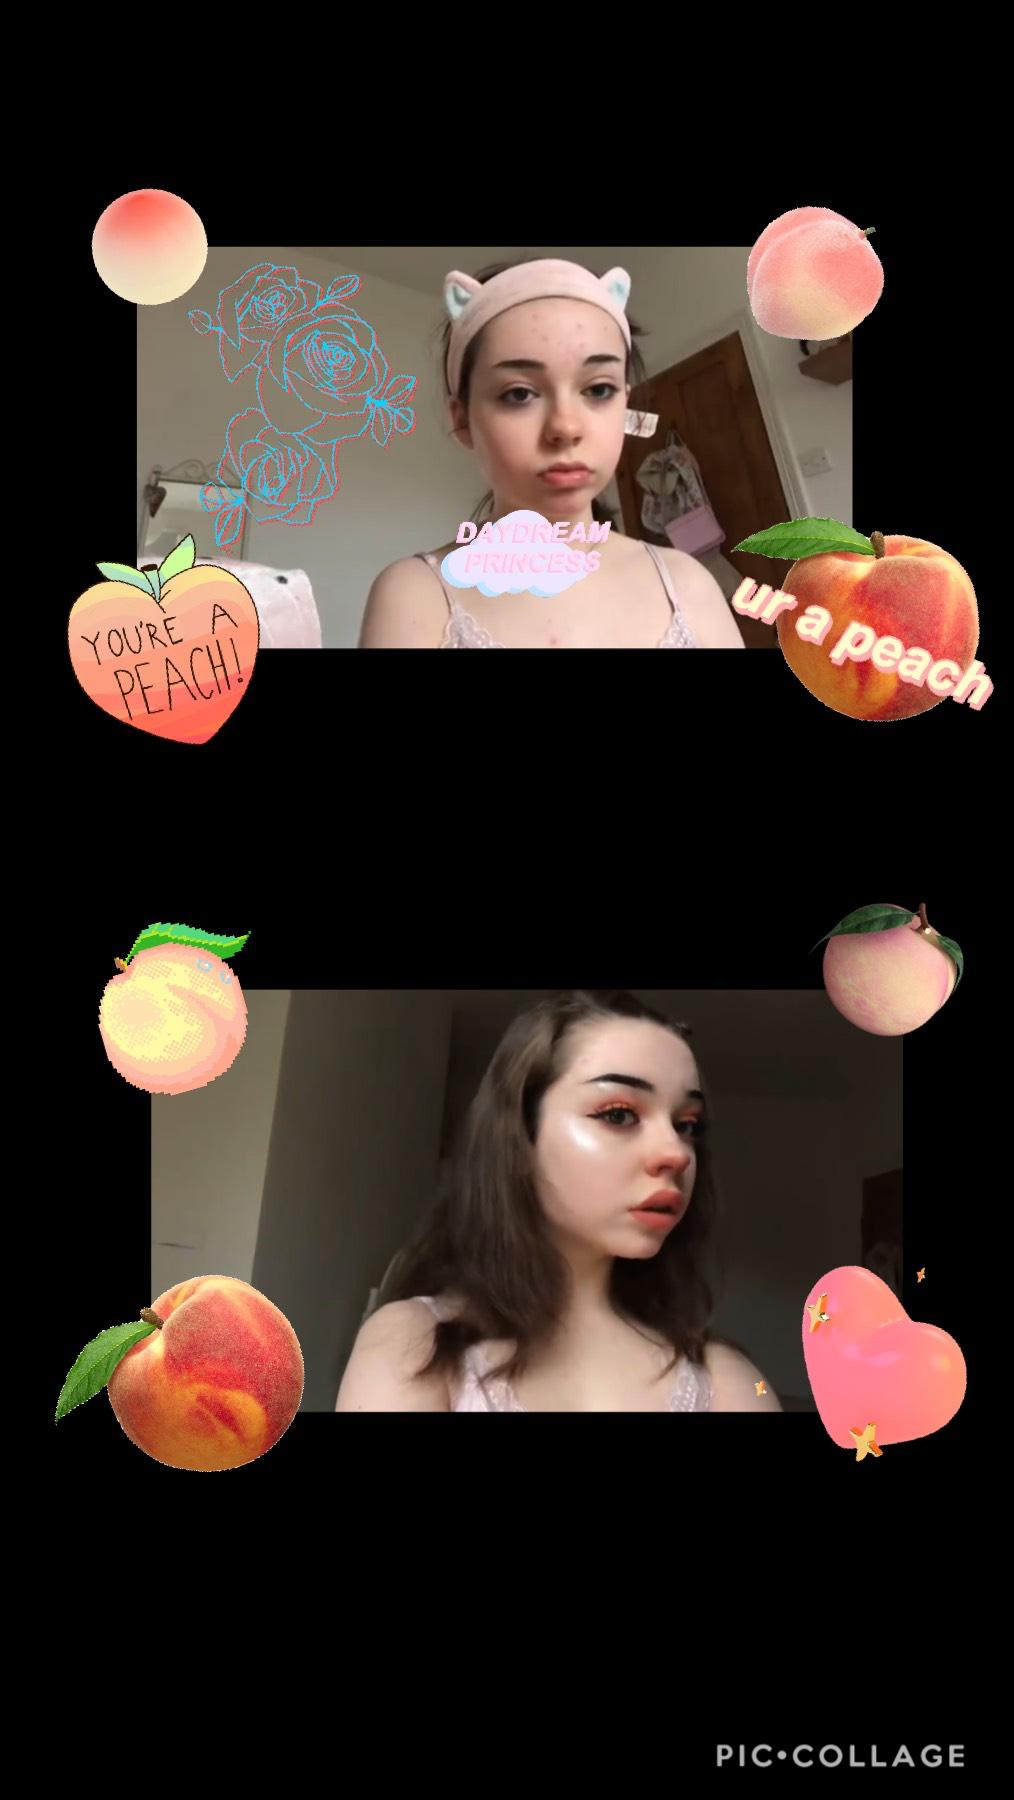 Peach 🍑 aesthetic!